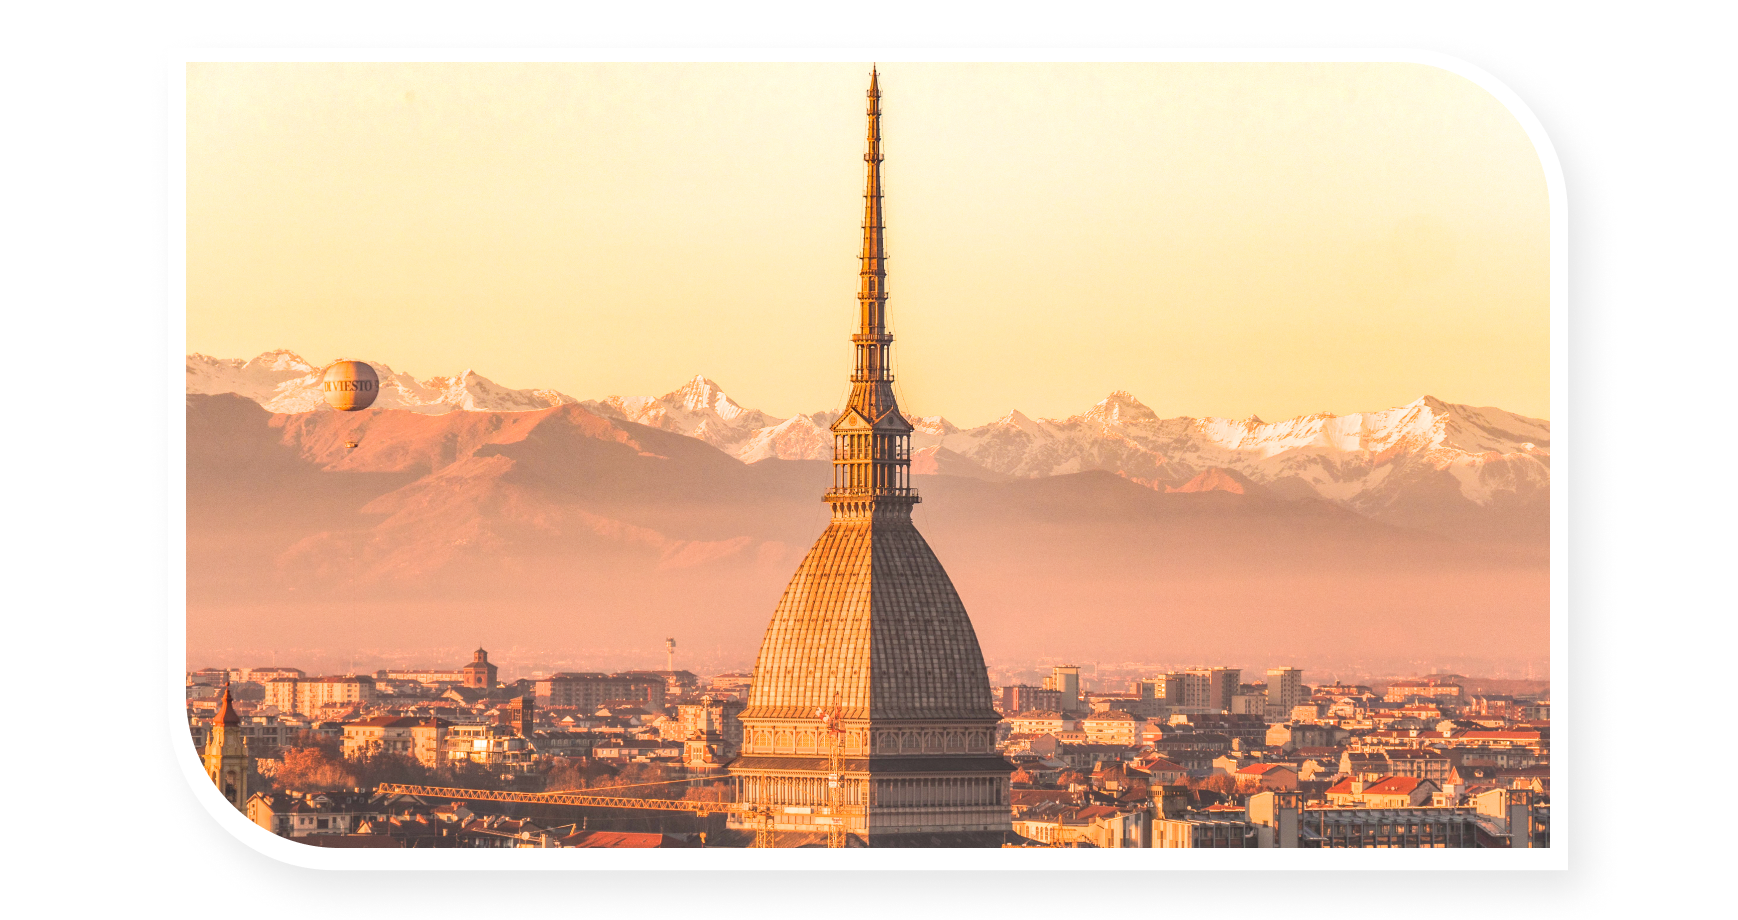 Mole Antonelliana is Turin's iconic building